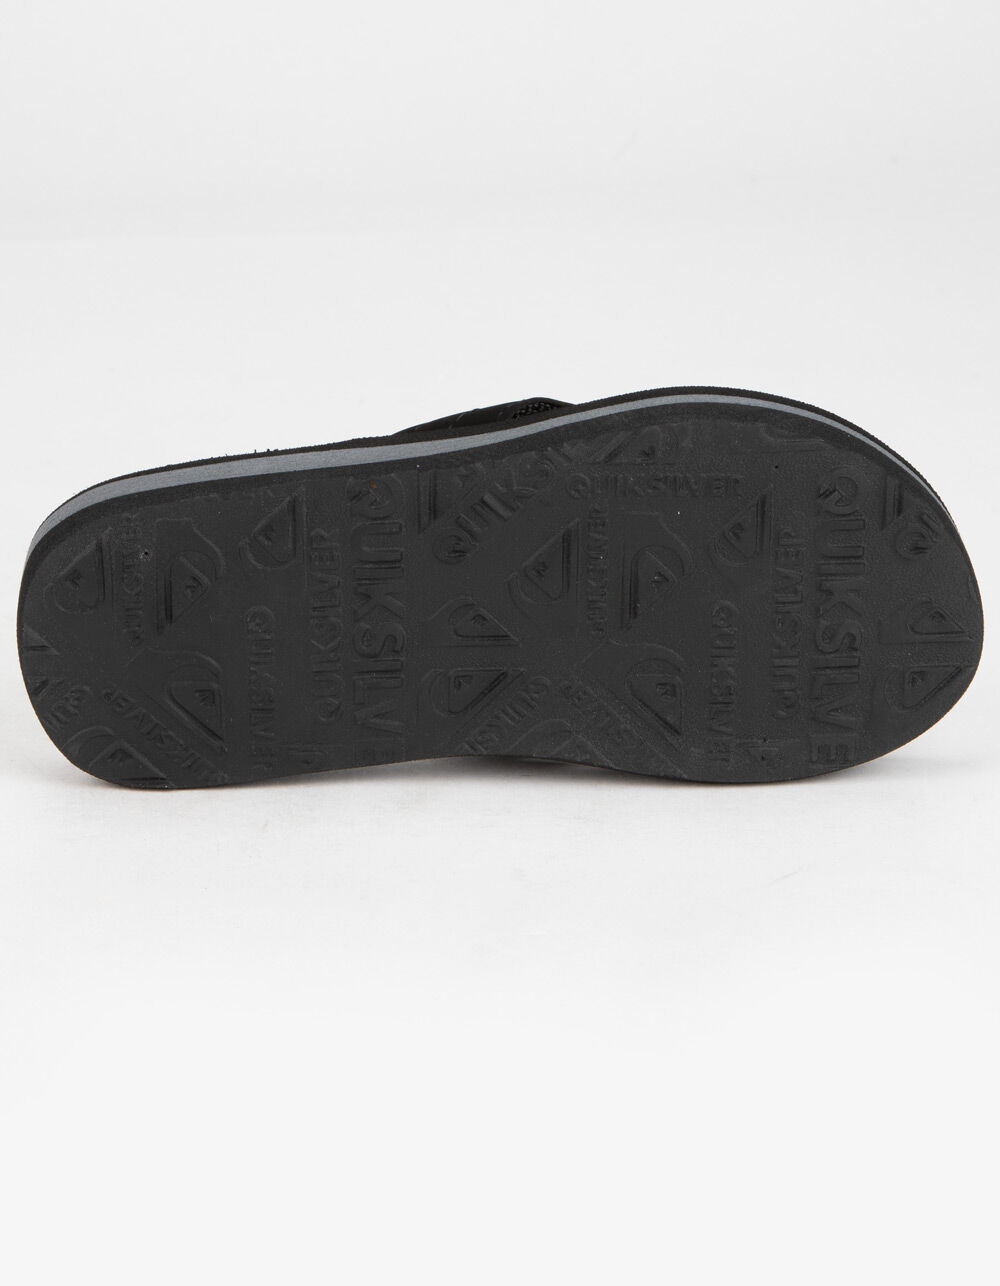 QUIKSILVER Carver Print Boys Sandals - BLACK COMBO | Tillys